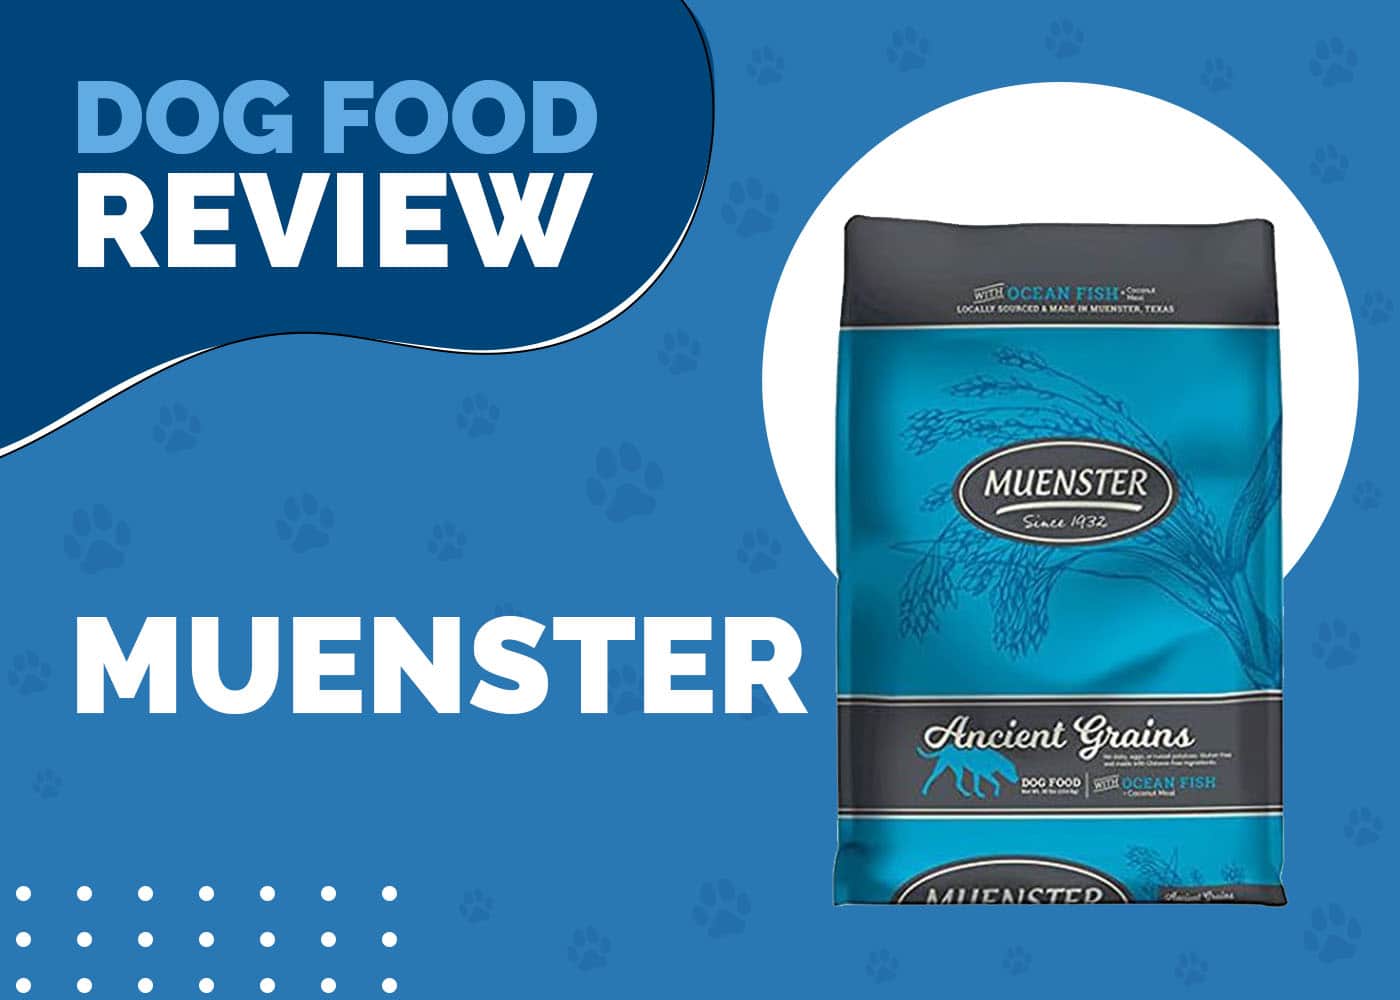 Muenster Dog Food Review